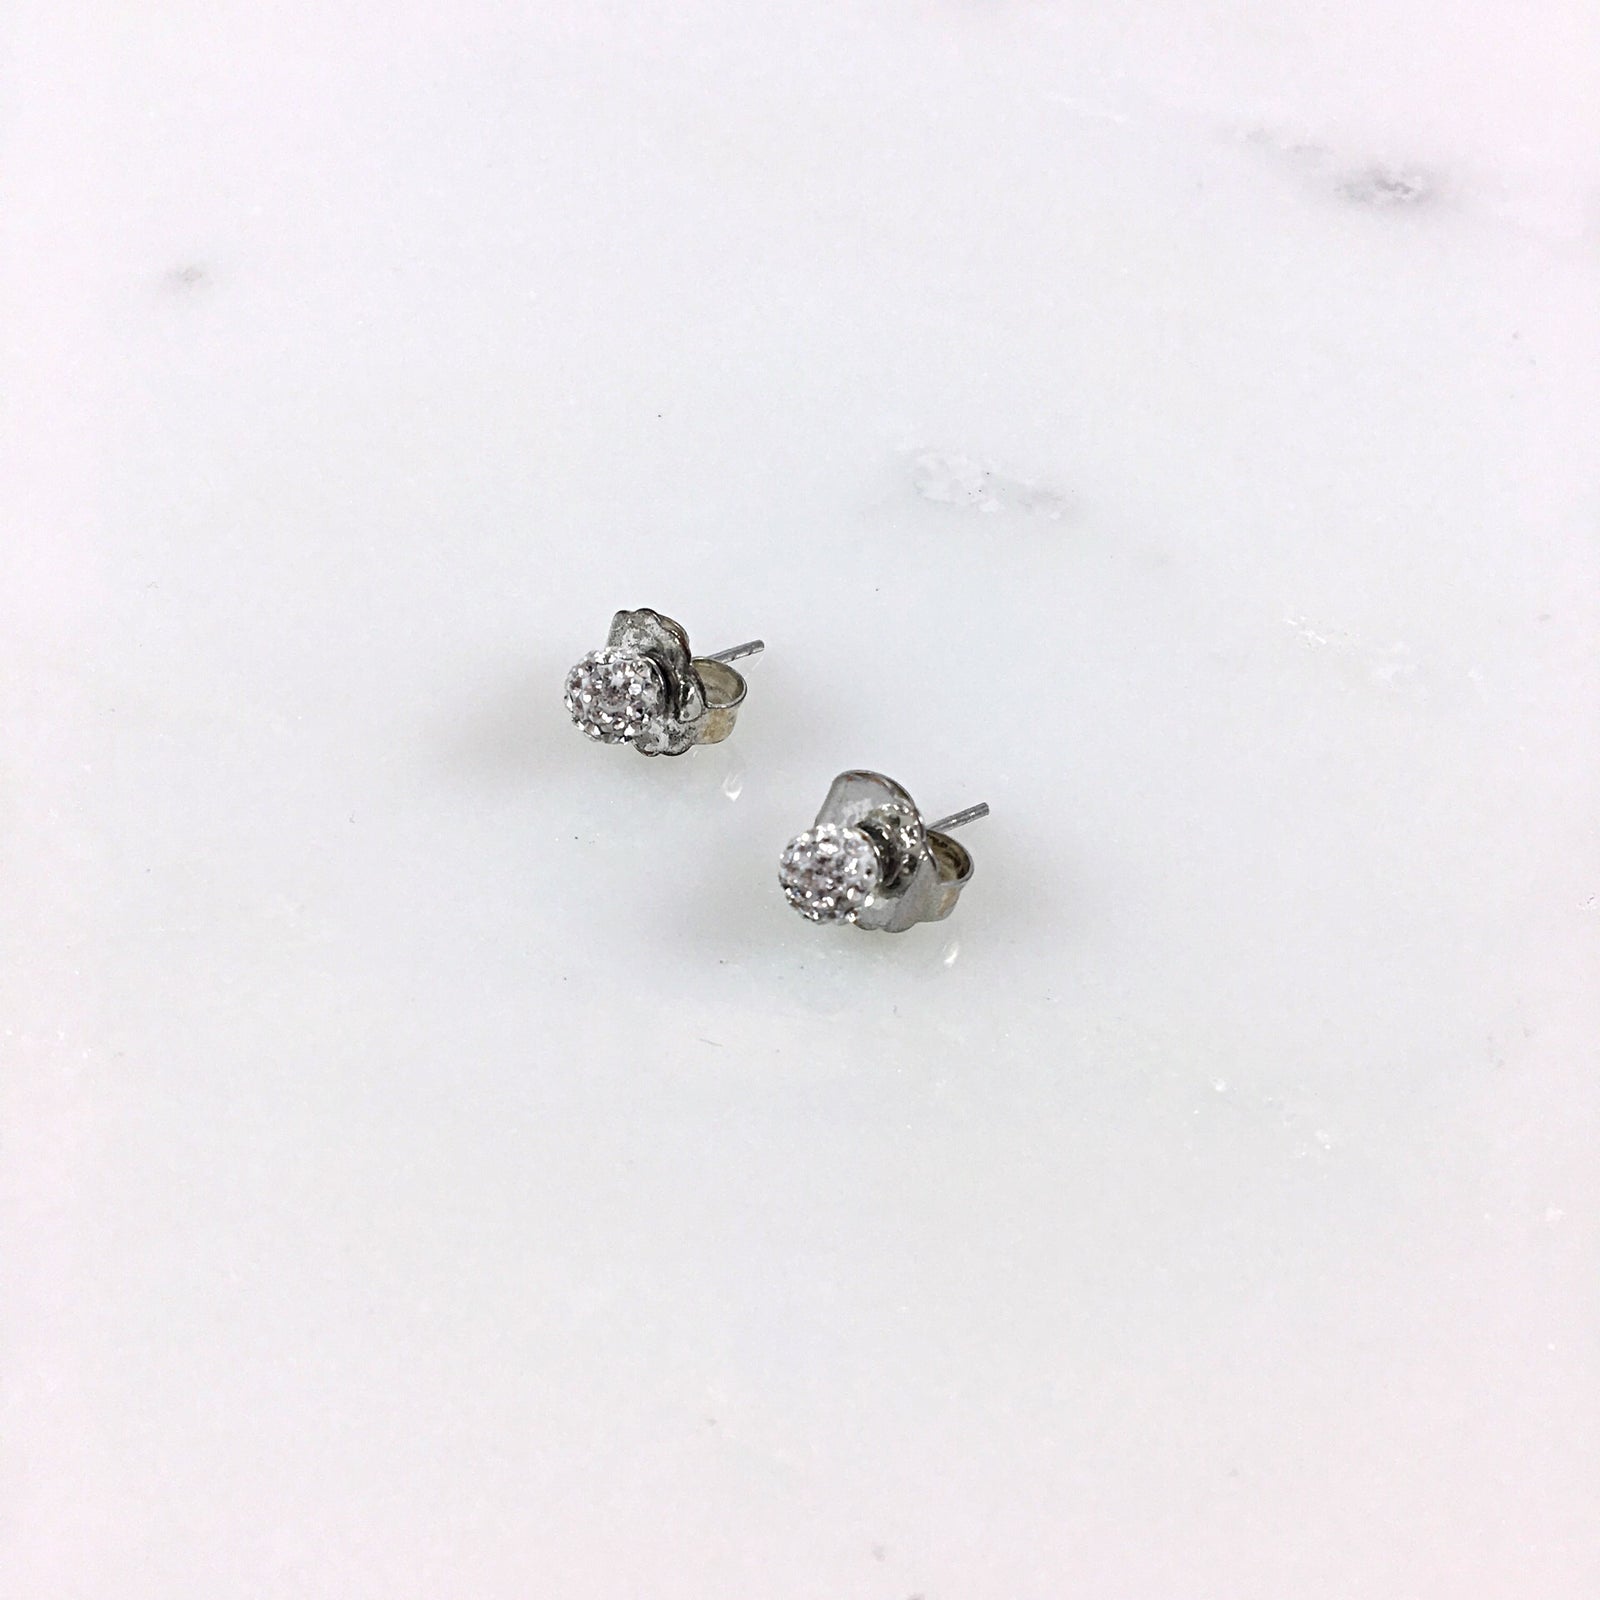 6mm White Stud Earrings